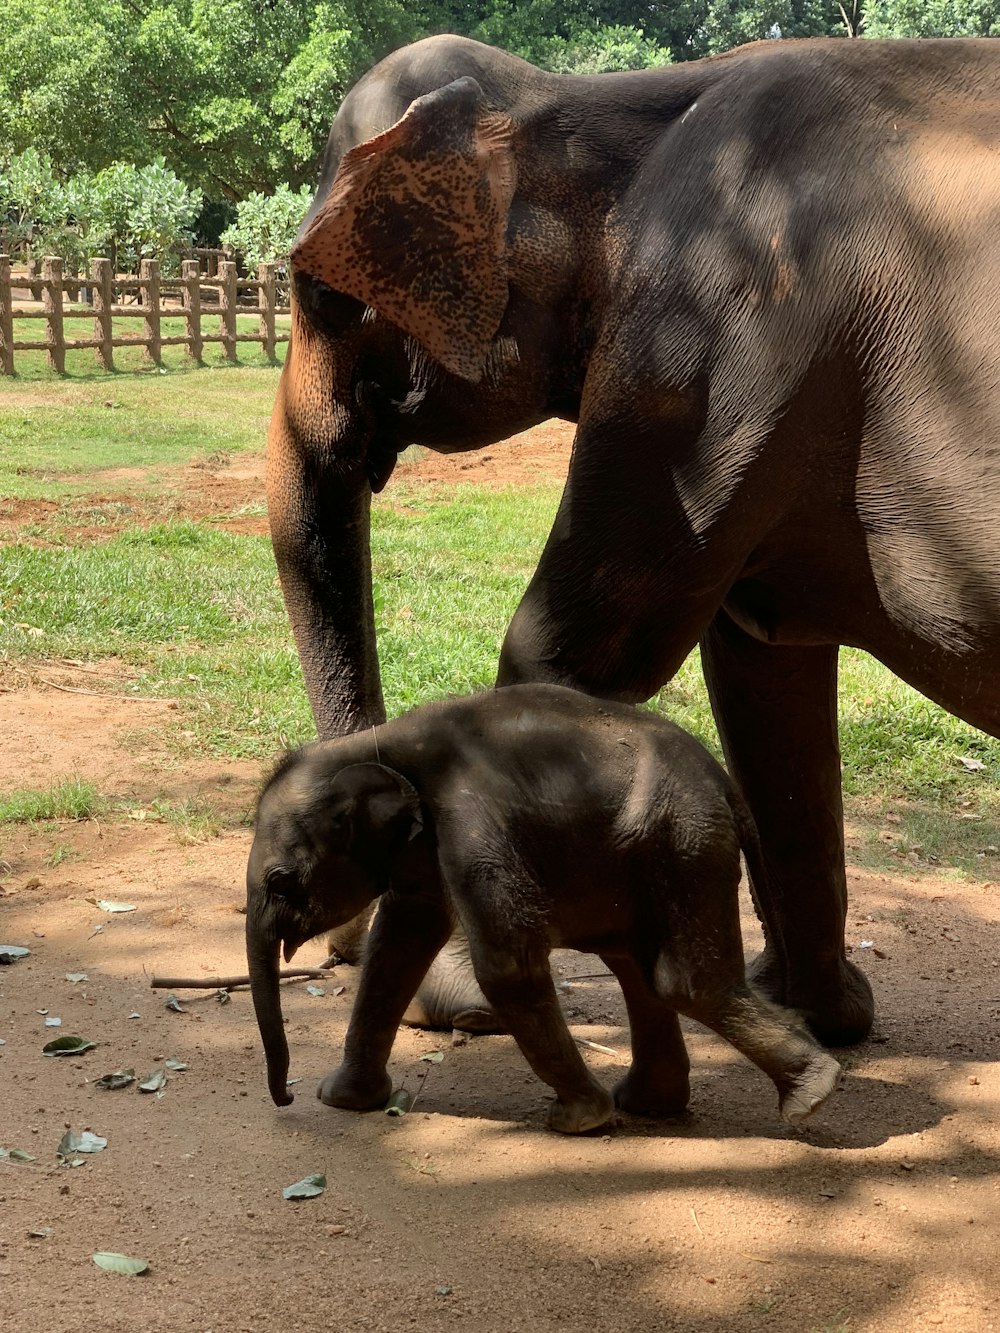 a baby elephant walking next to an adult elephant